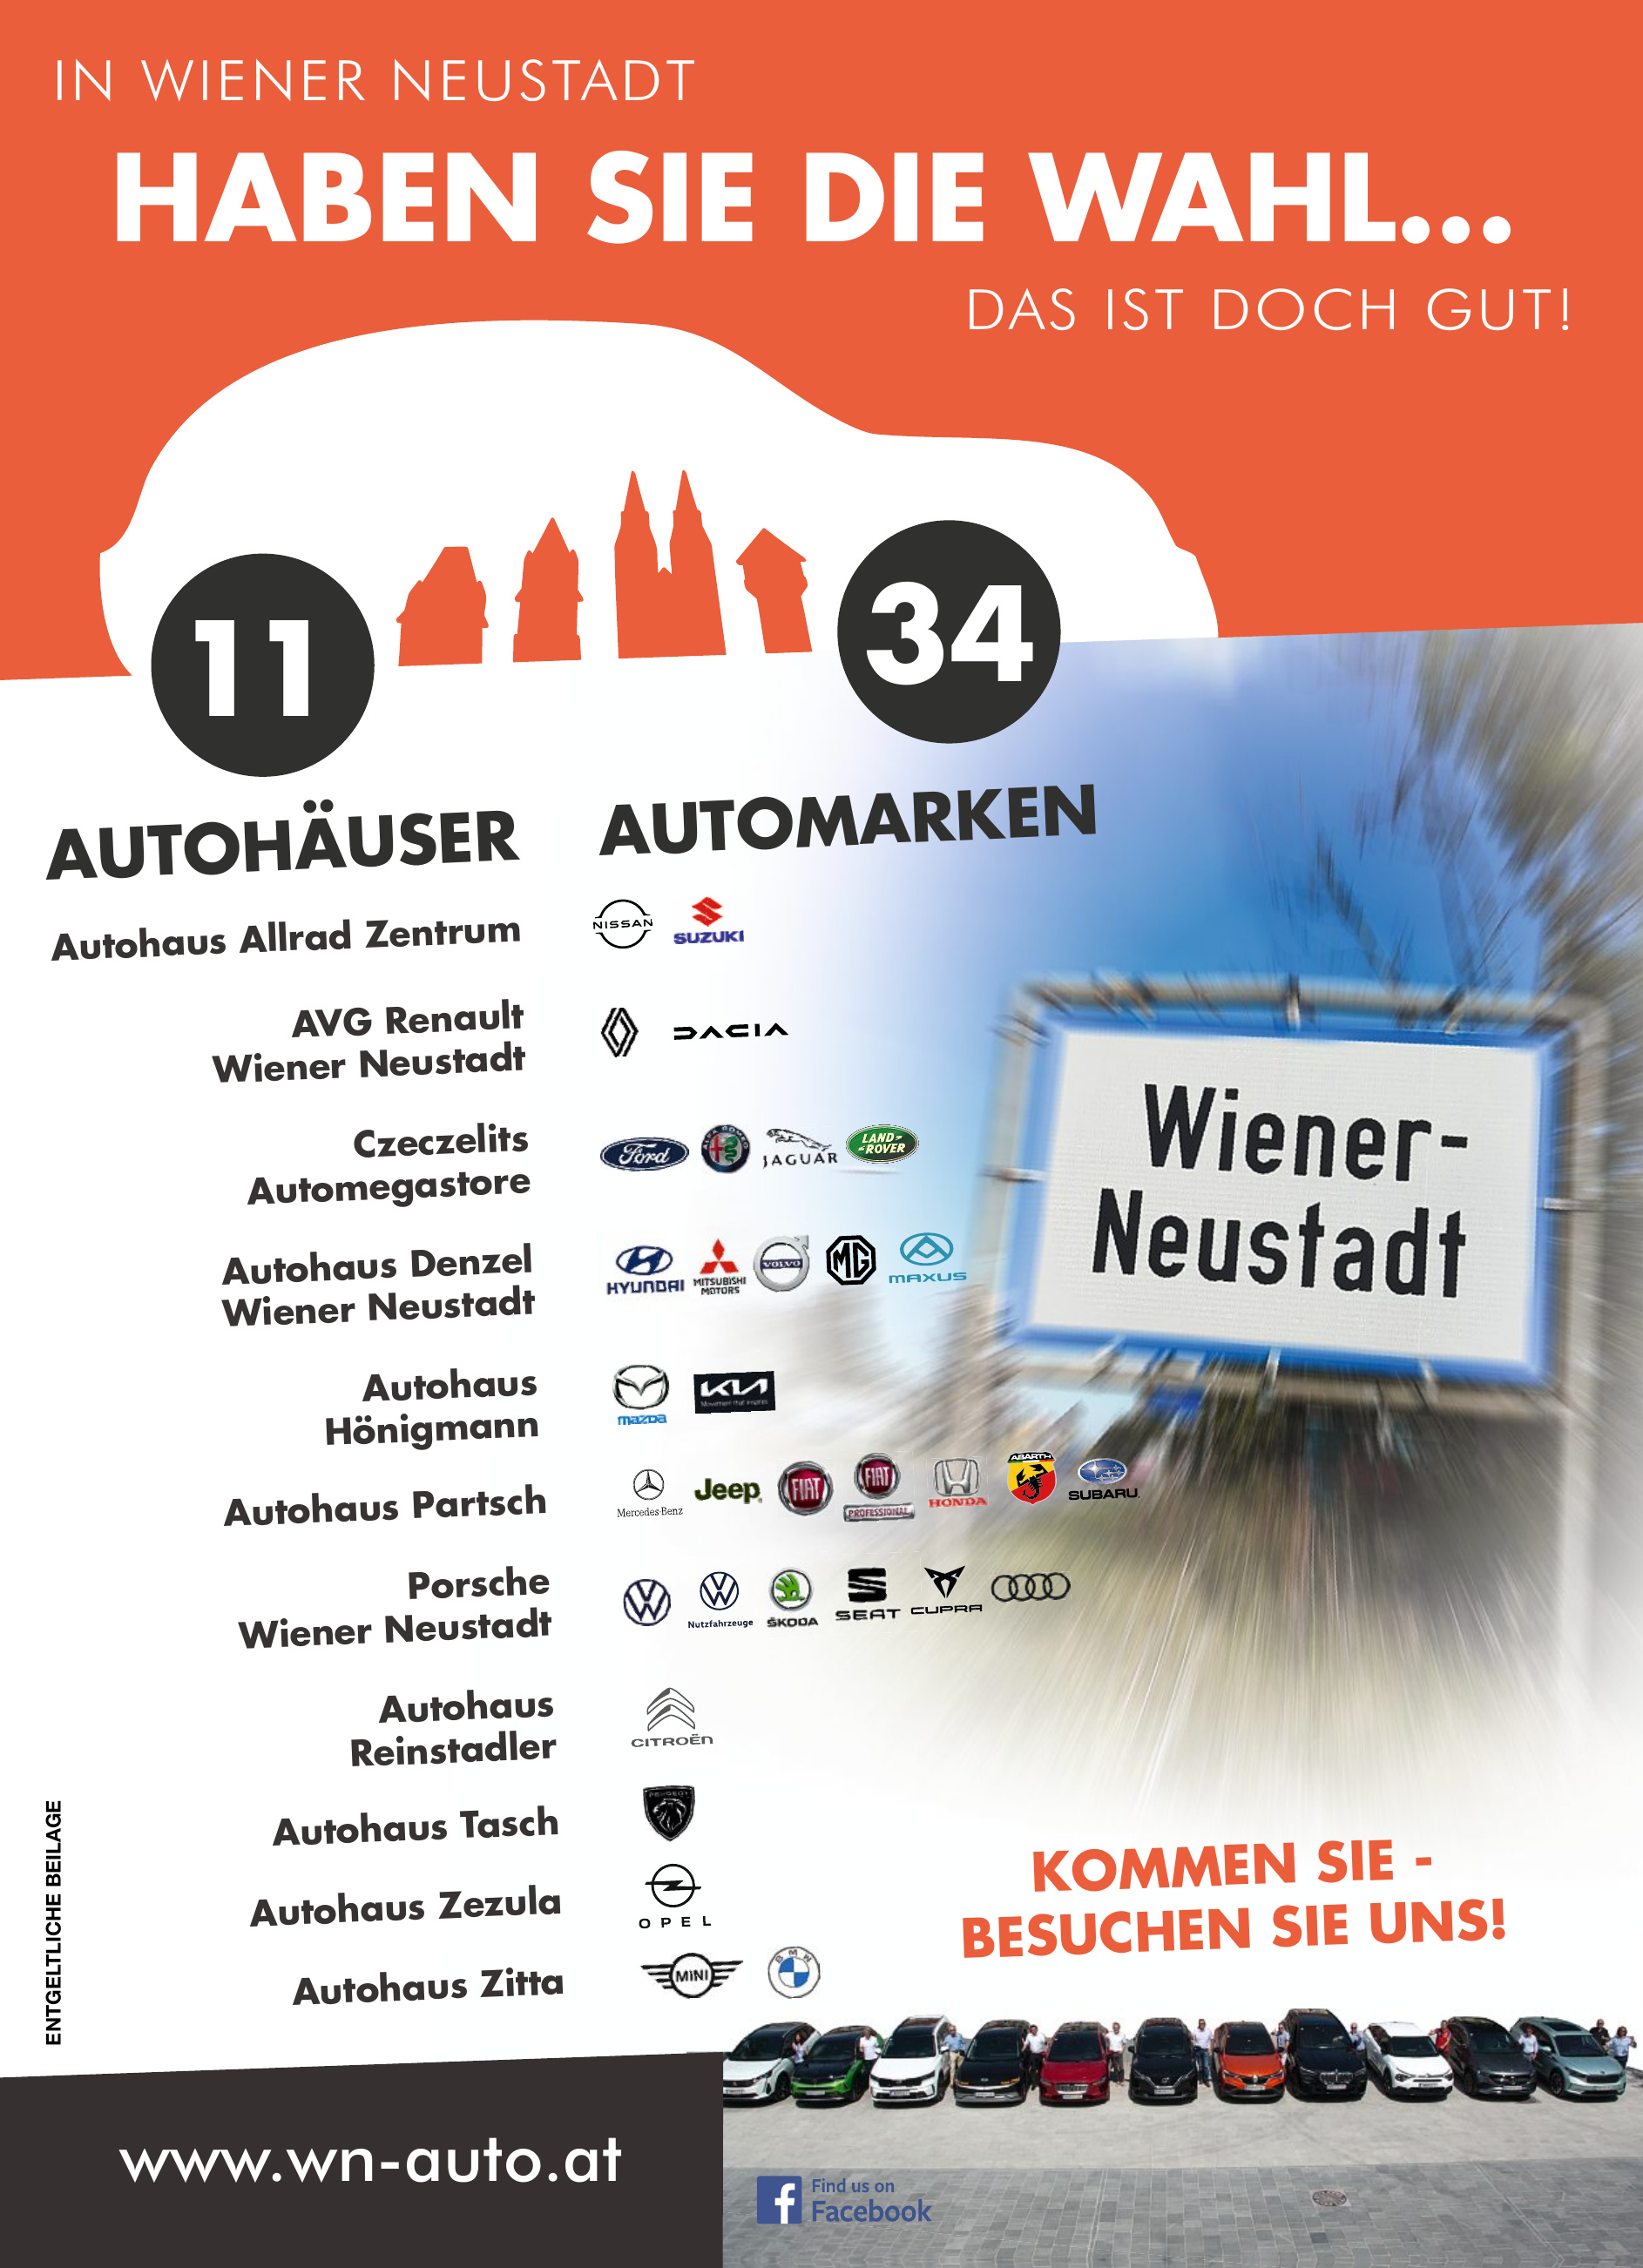 Wiener Neustadt überzeugt erneut als innovative Autostadt Image 2